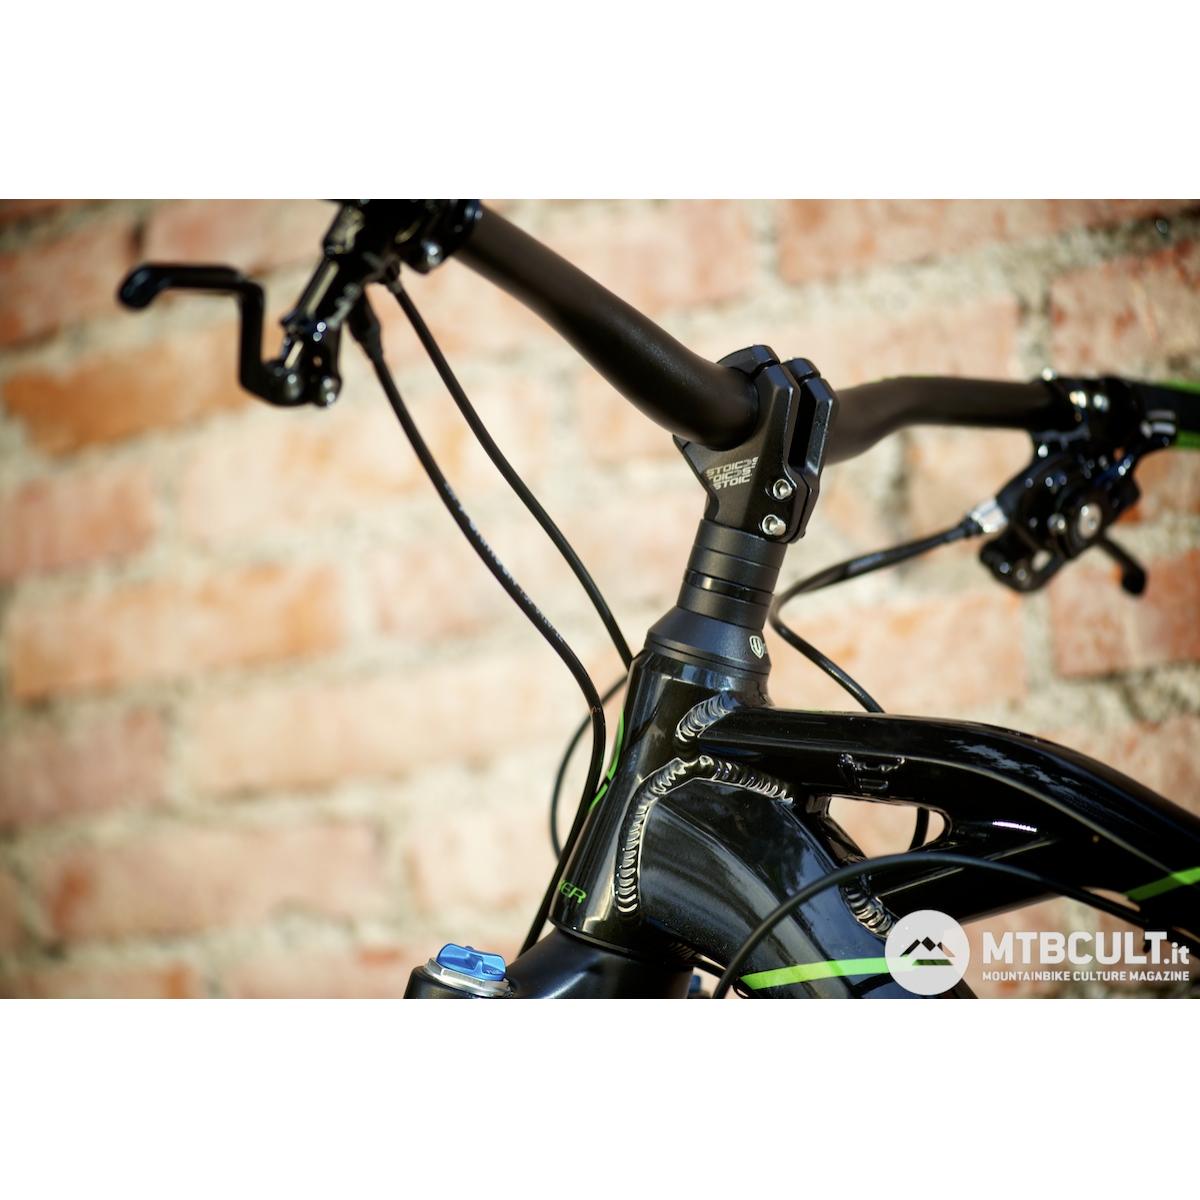 LEGA di Alluminio MTB Mountain Bike Manubrio Bicicletta Stelo 0 grado BAR STELO parti 